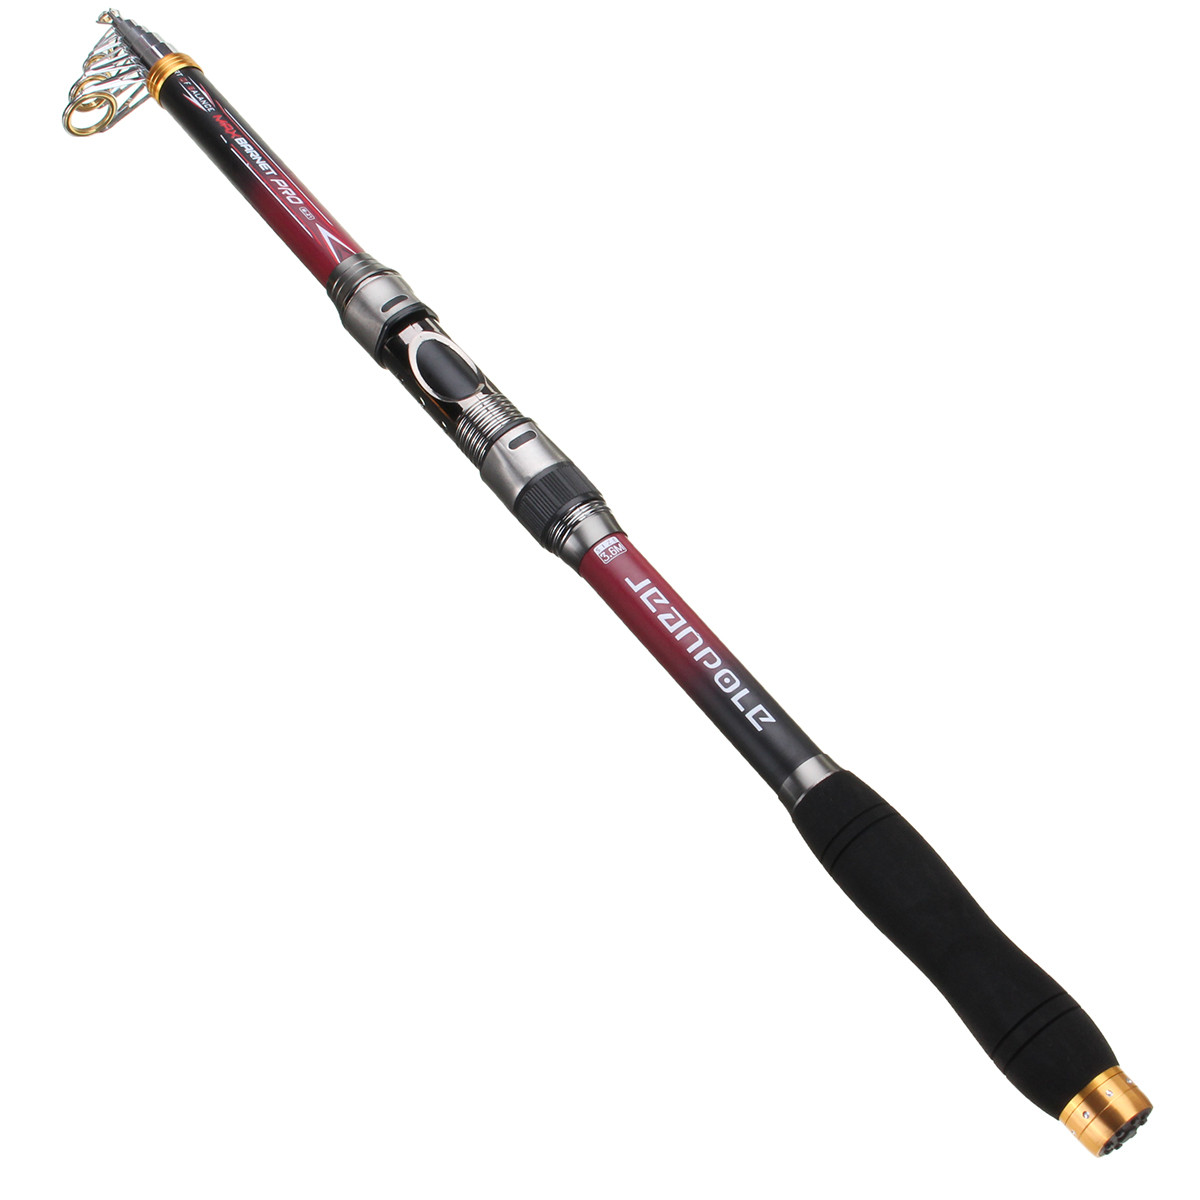 

ZANLURE 3.6m Carbon Fiber Telescopic Fishing Rod Spinning Sea Fishing Pole